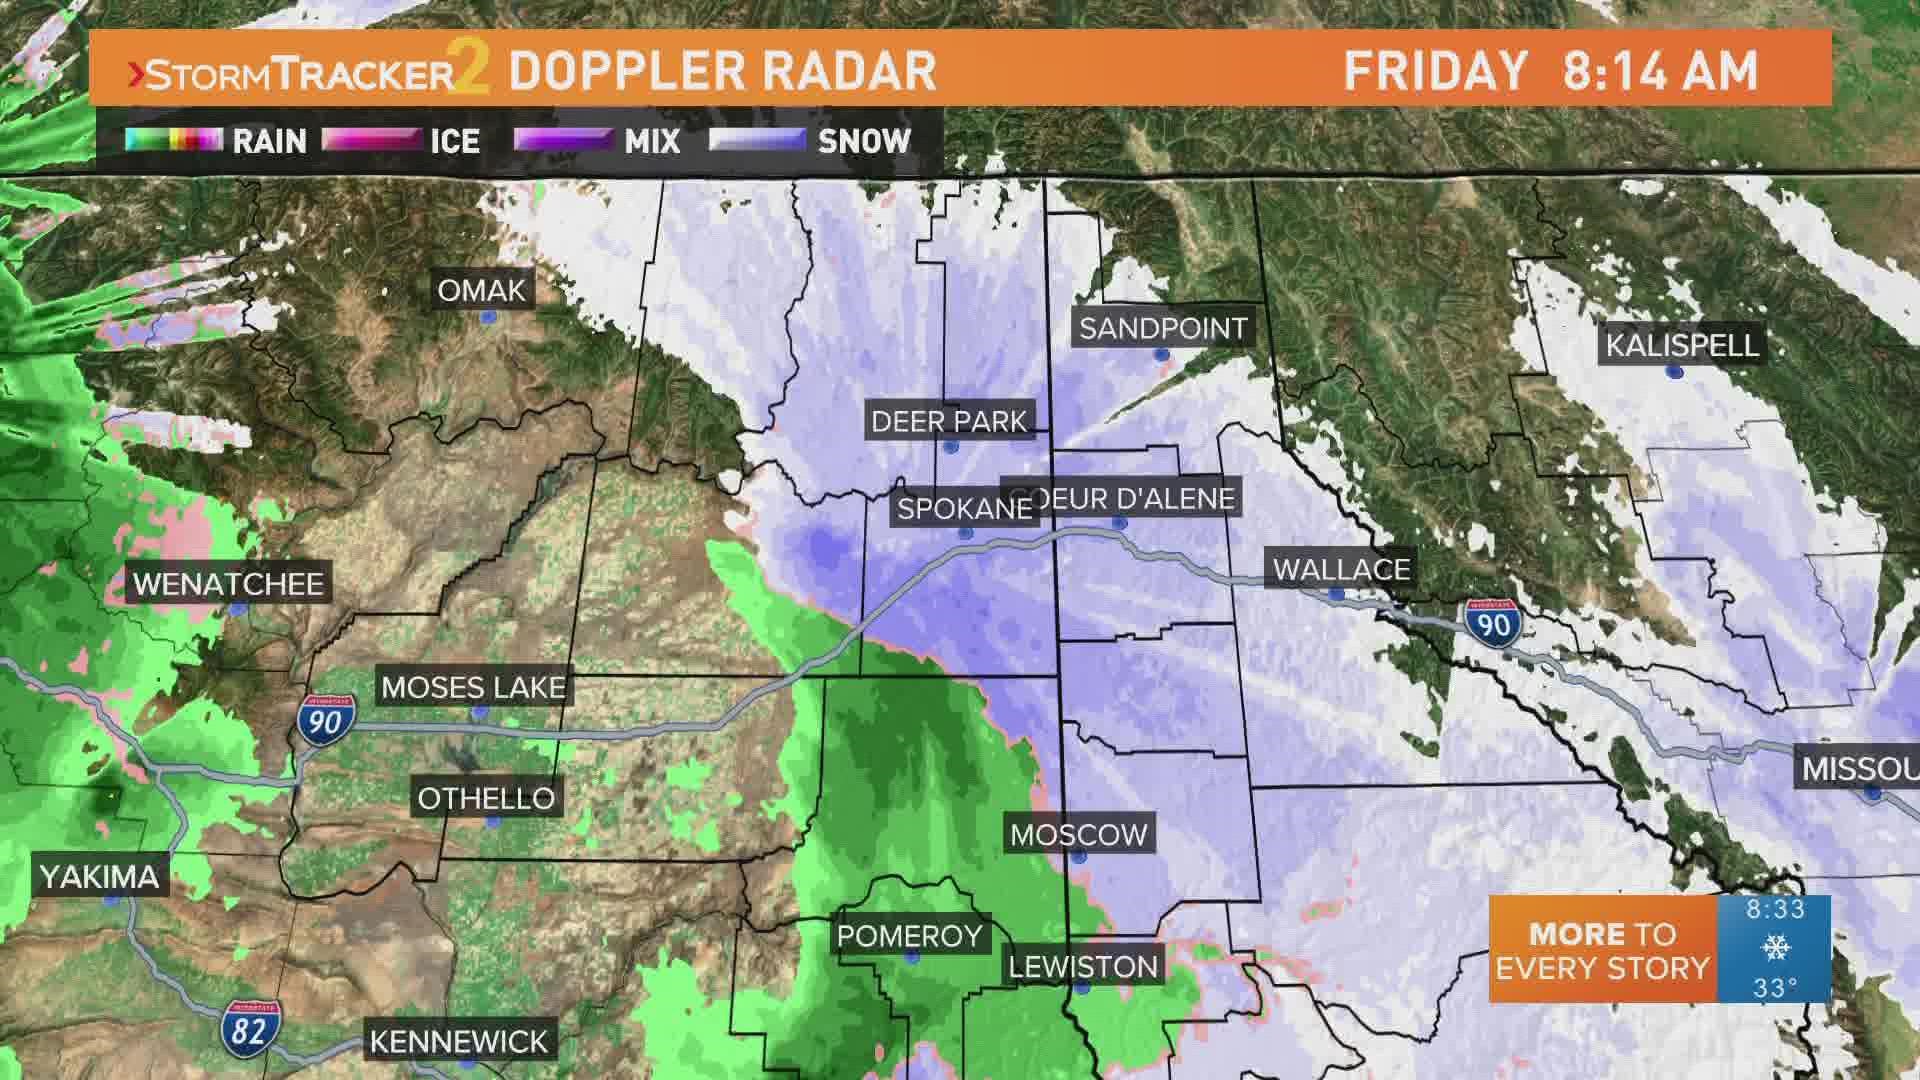 Spokane gets first snowfall of the season, few schools closed